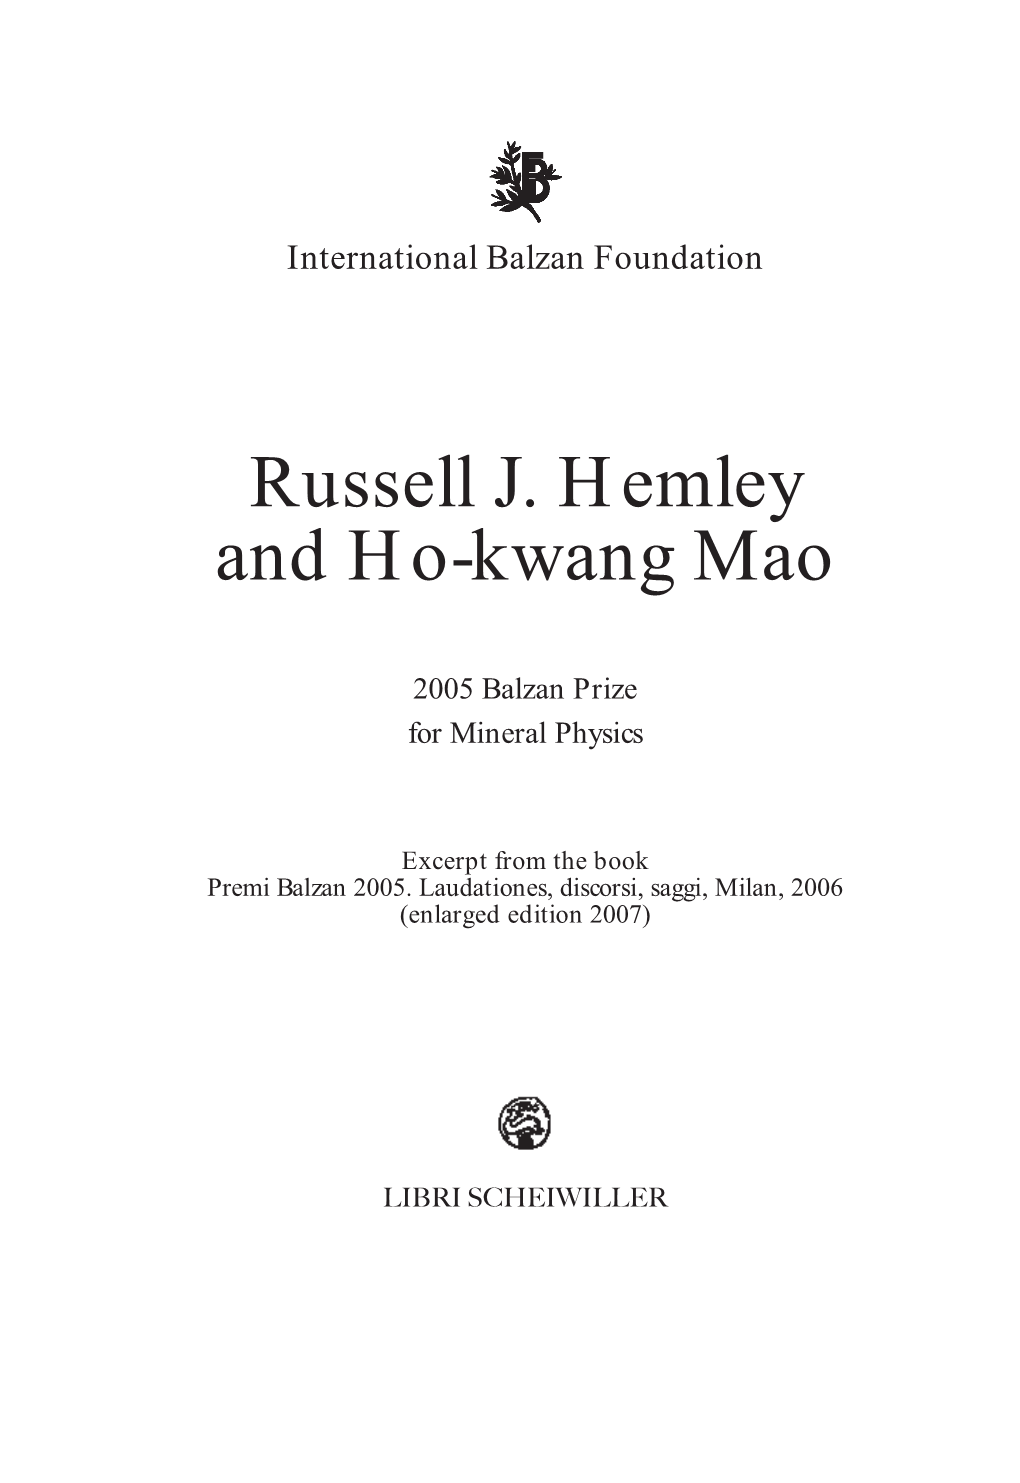 Russell J. Hemley and Ho-Kwang Mao